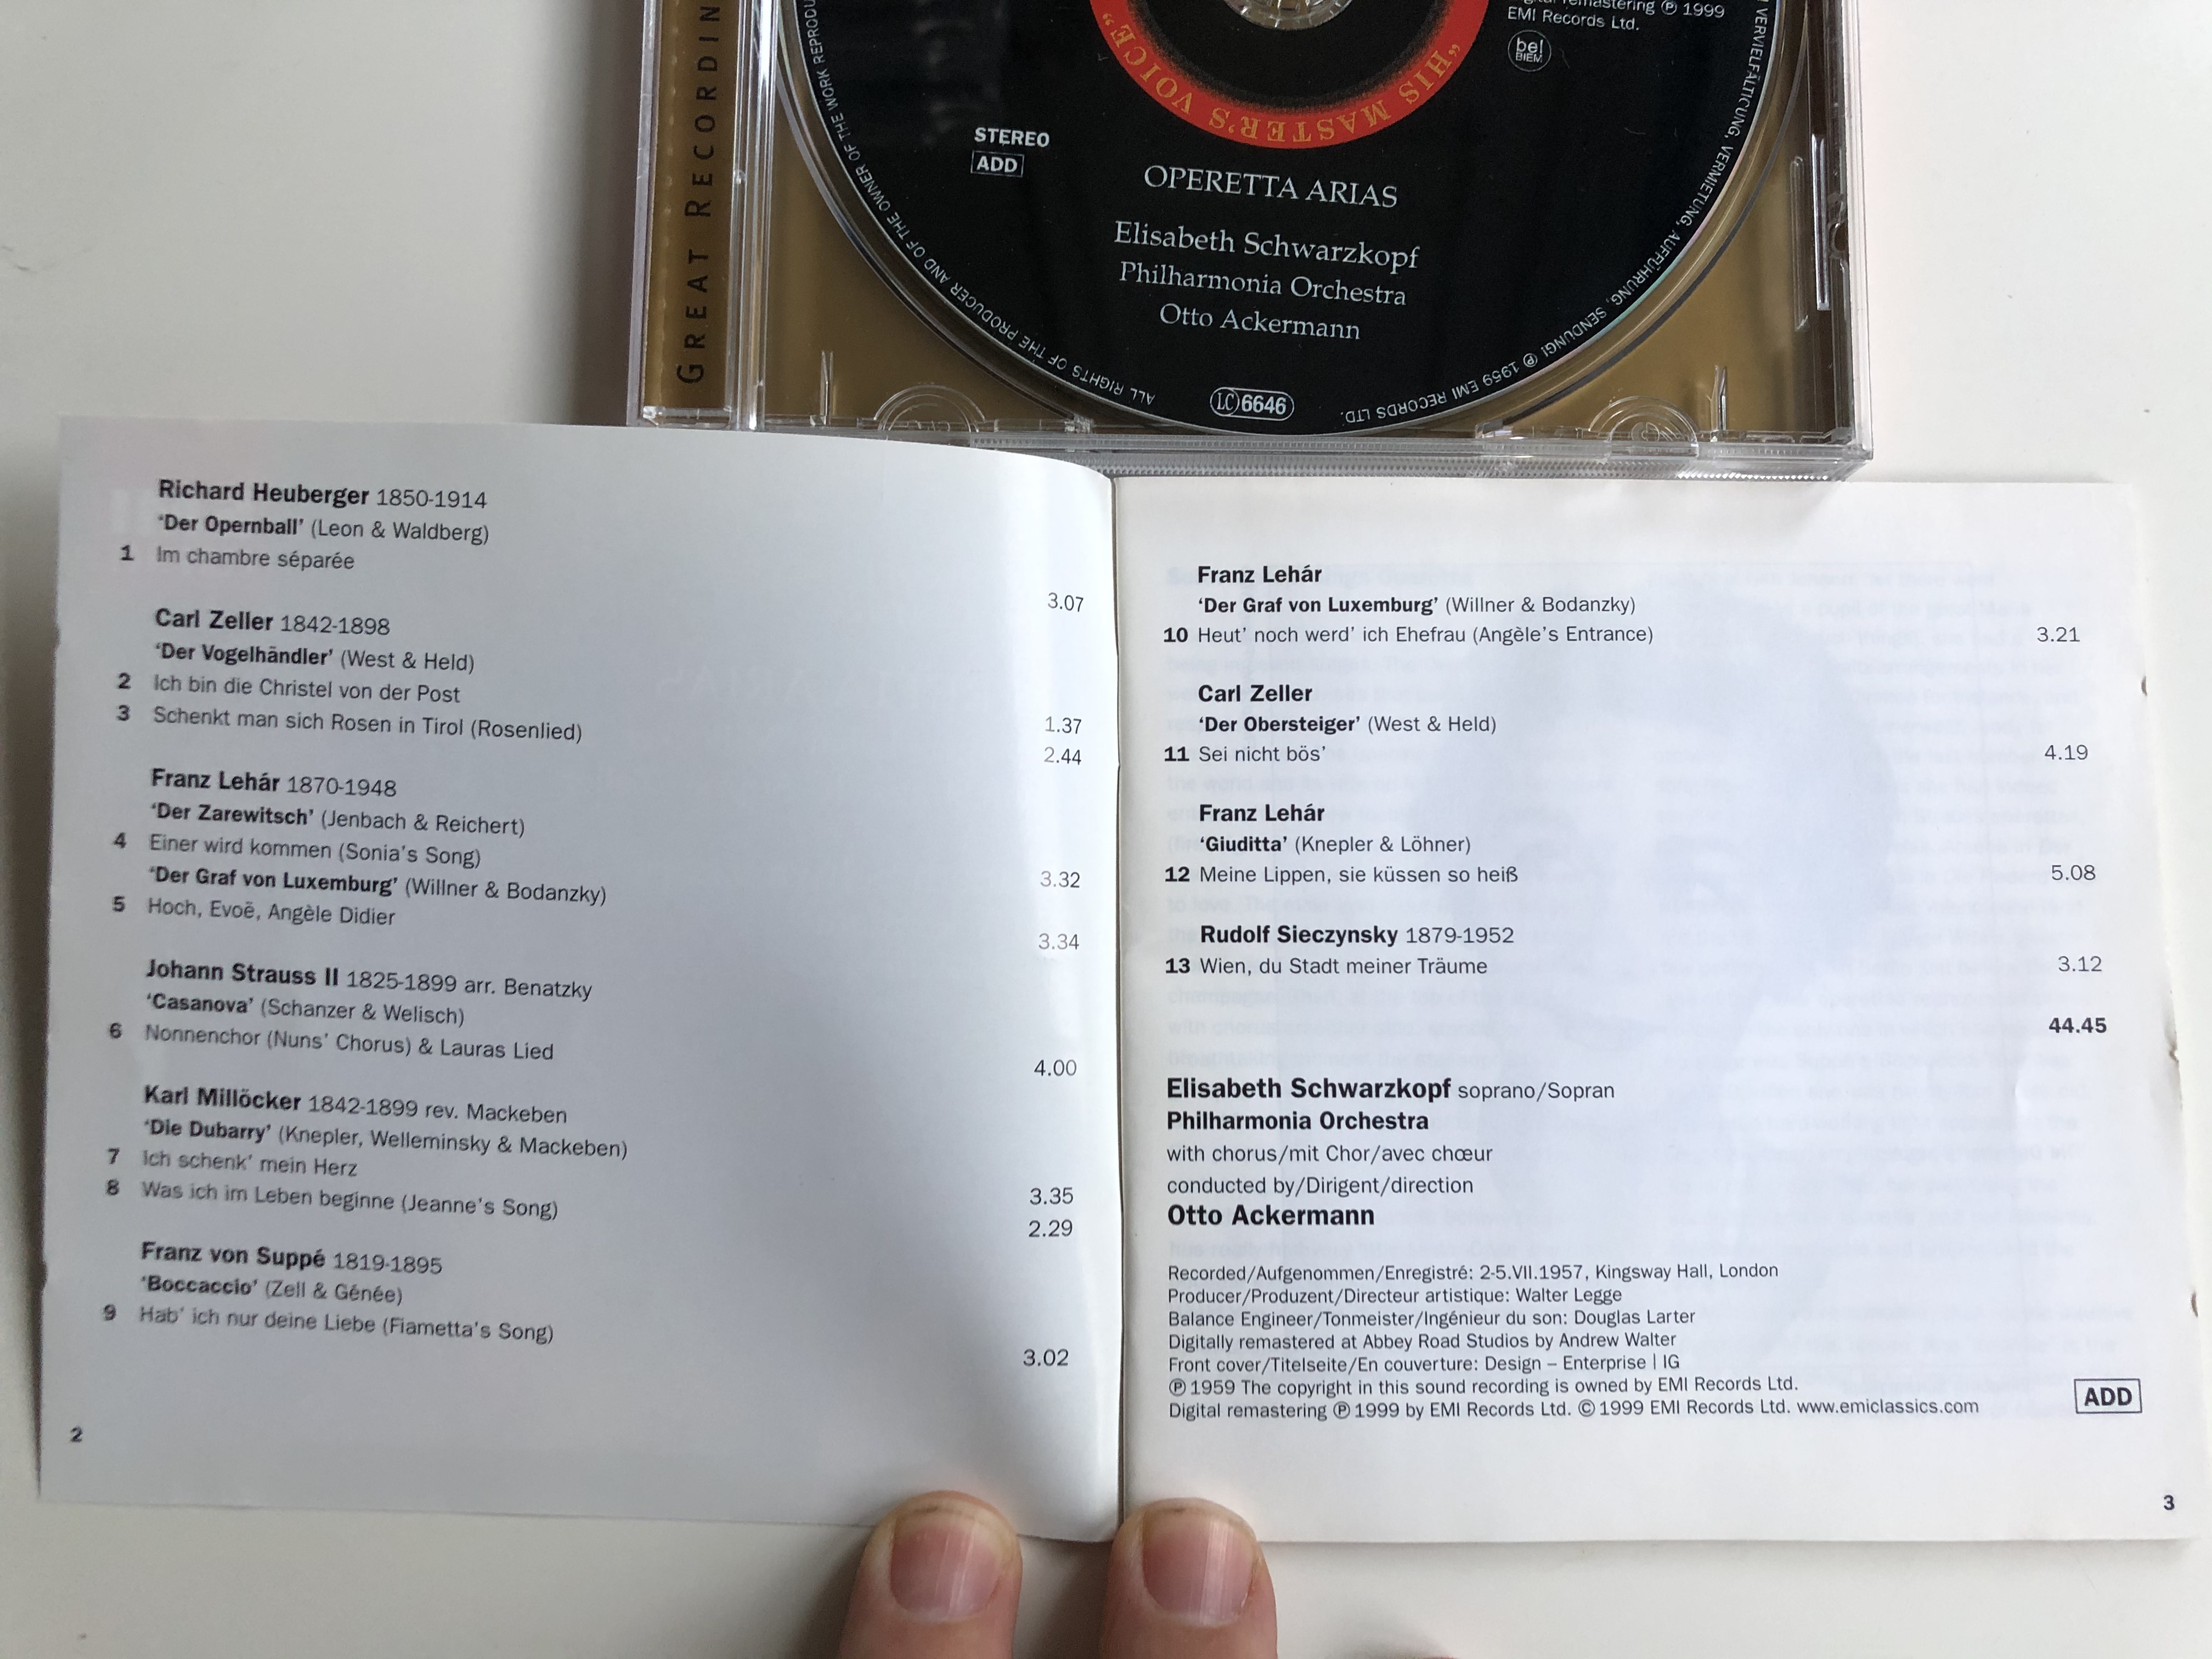 operetta-arias-heuberger-leh-r-mill-cker-sieczynsky-johann-strauss-ii-supp-zeller-elisabeth-schwarzkopf-otto-ackermann-philharmonia-orchestra-emi-classics-audio-cd-1999-stereo-7243-3-.jpg